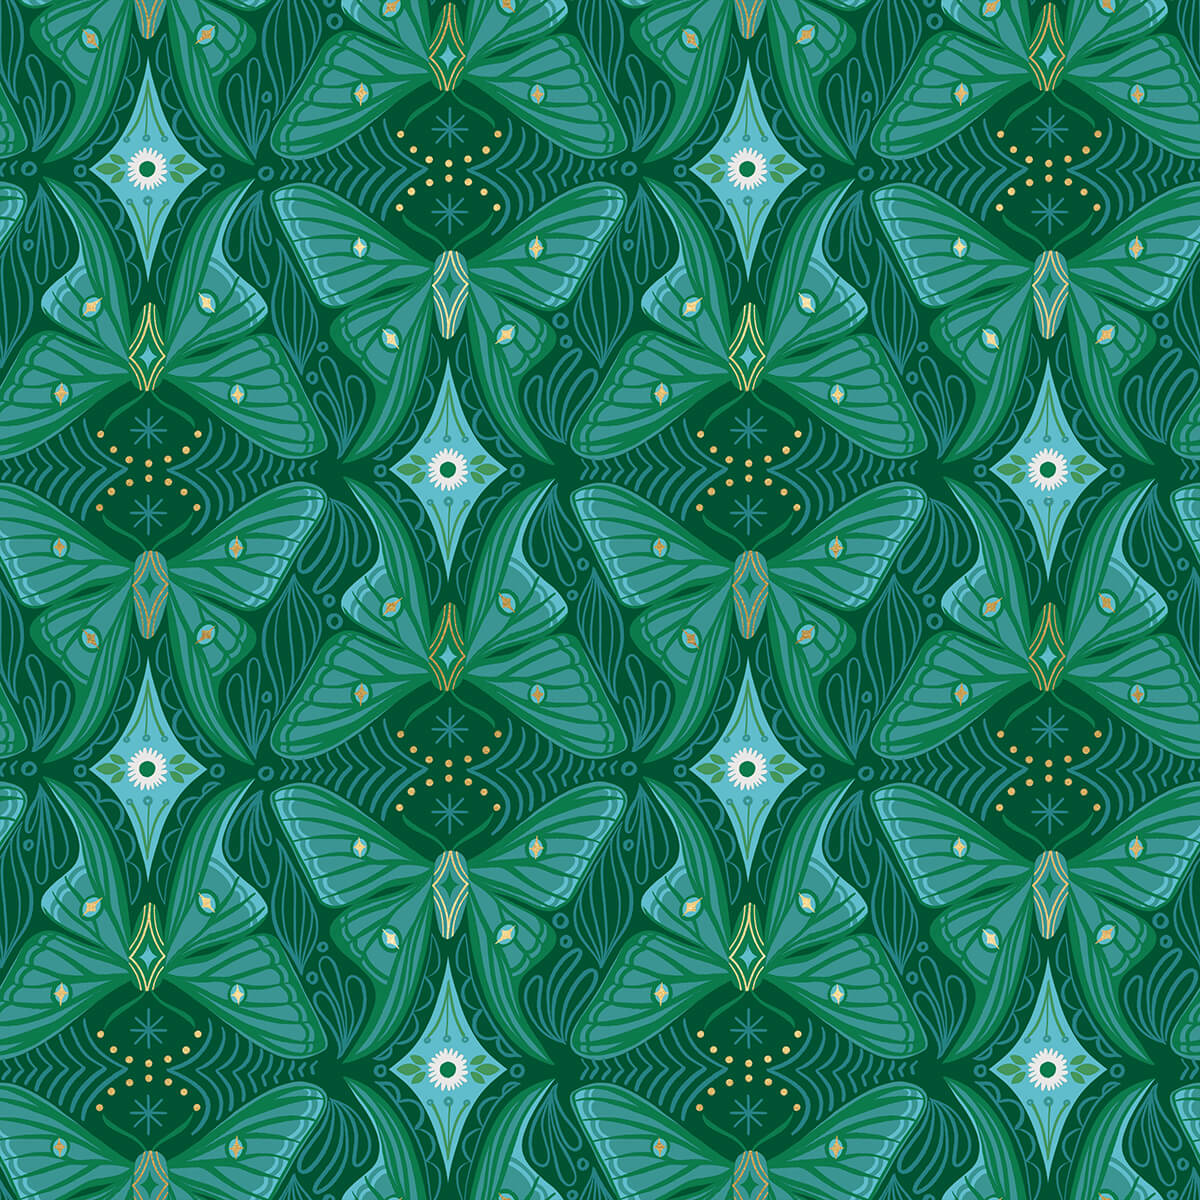 Metro Floral Geometric Butterfly - Camellia Fabric Range - Moda Fabrics - Dark Green